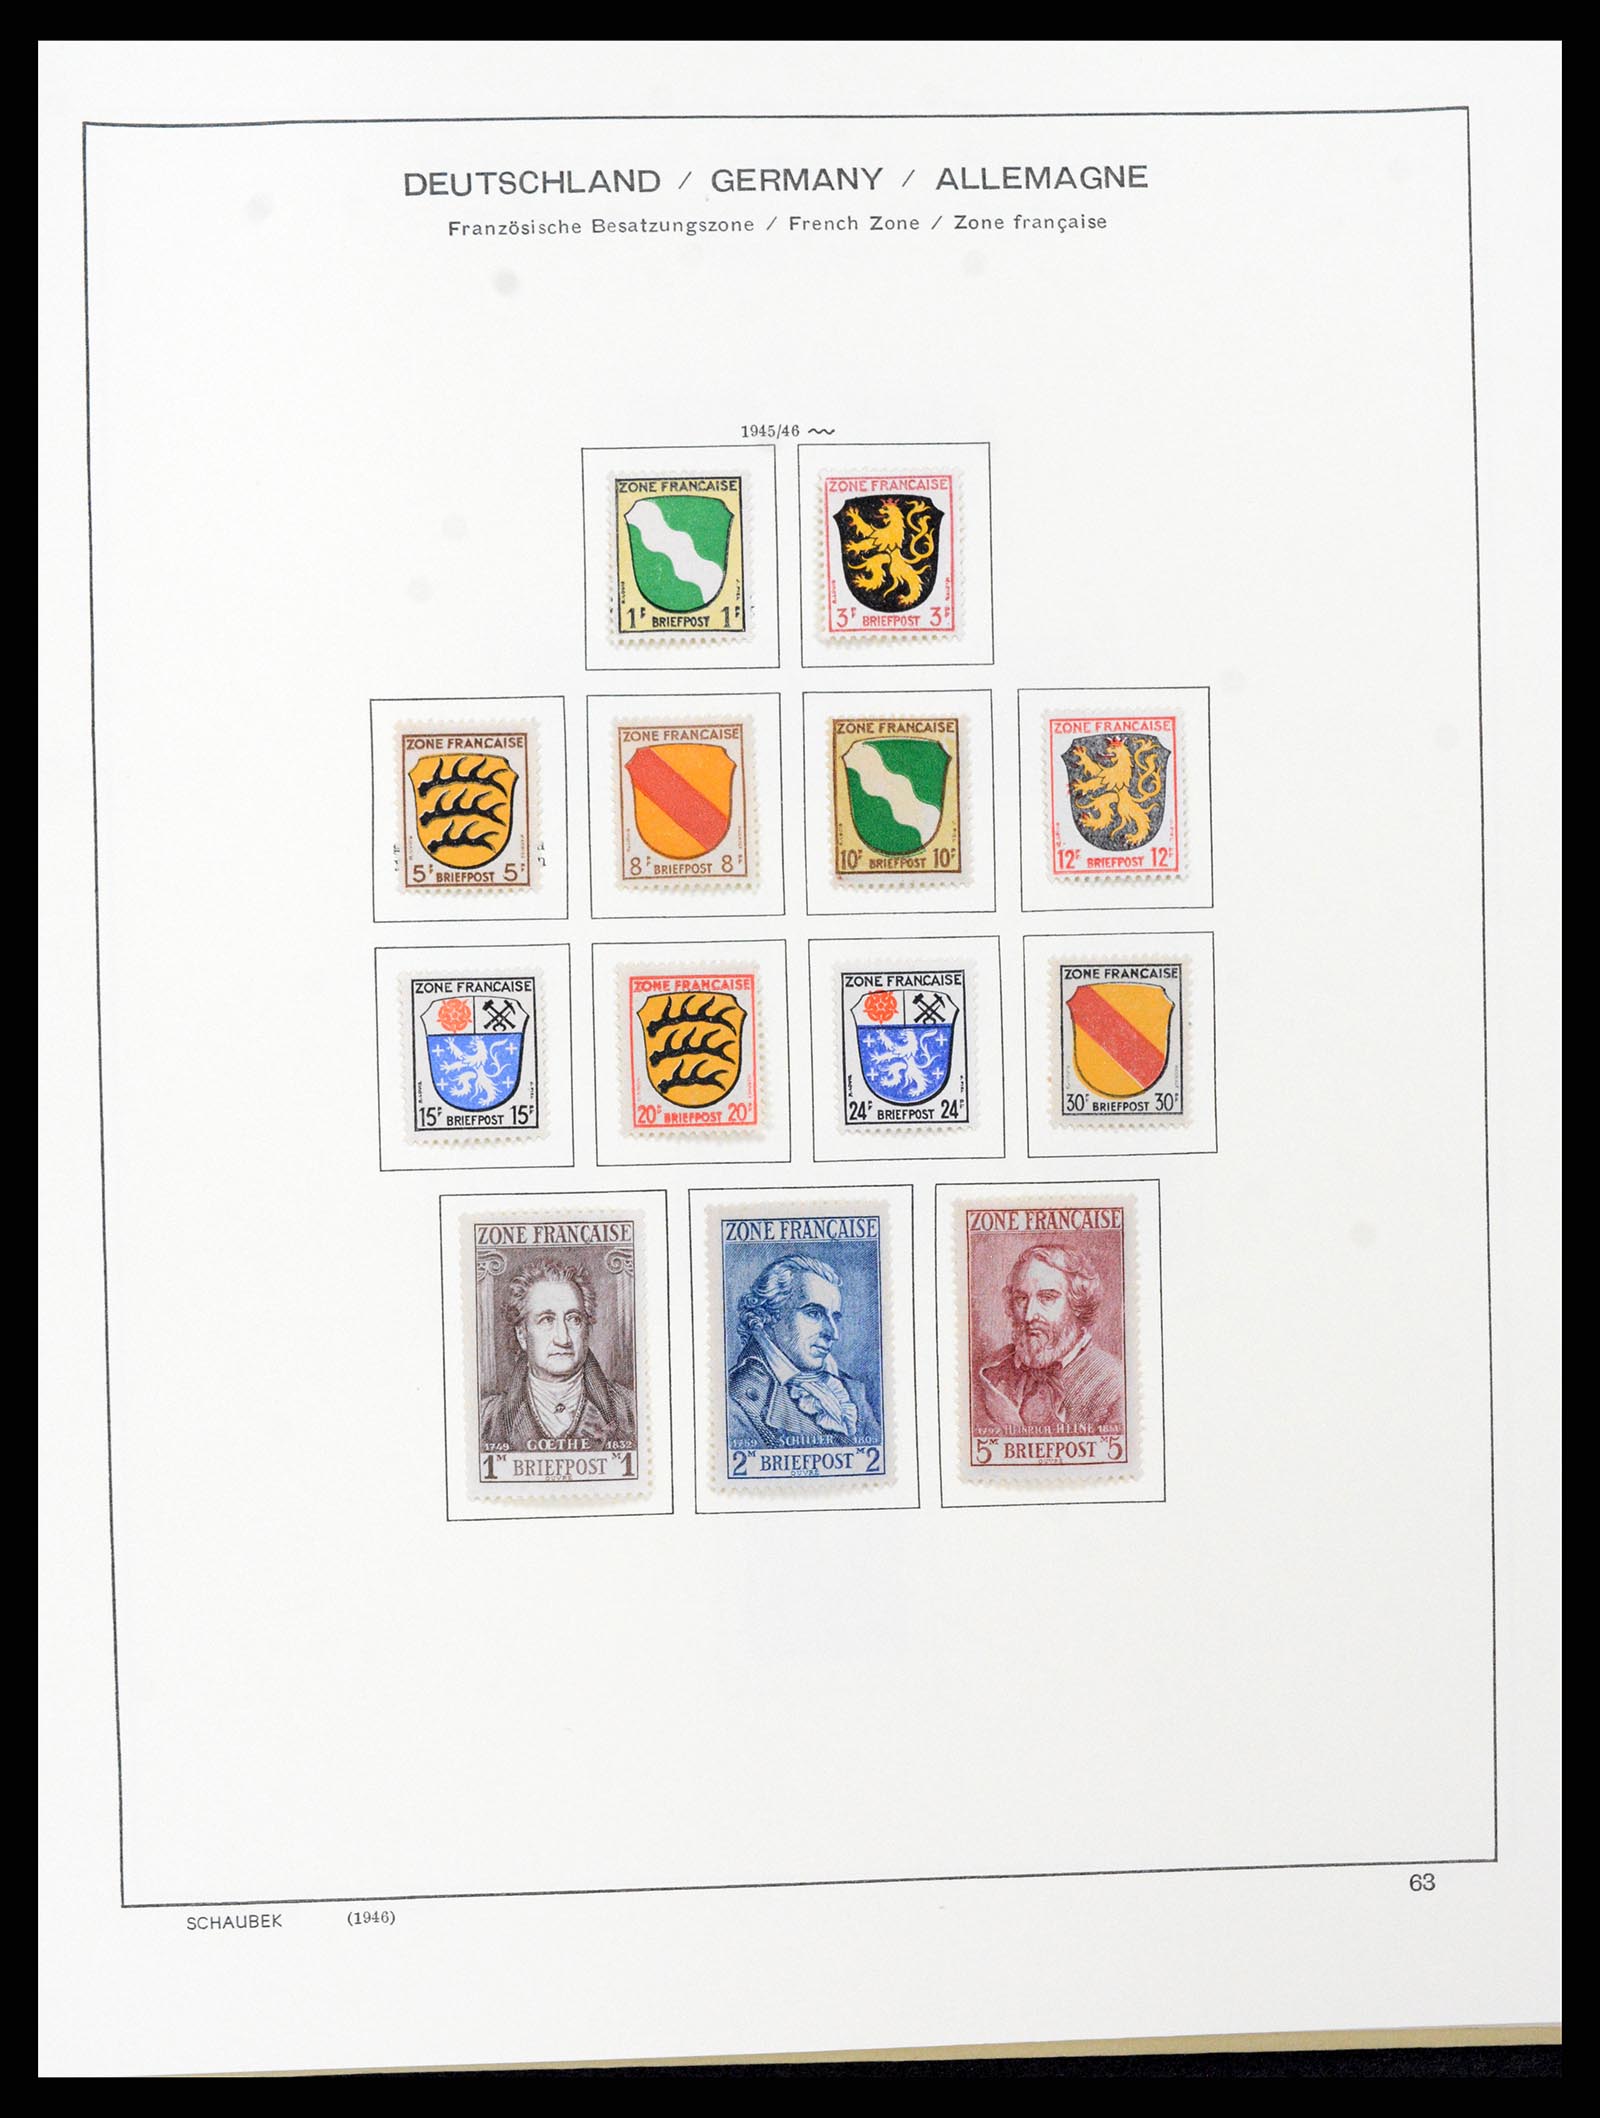 37645 057 - Stamp collection 37645 German Zones 1945-1949.